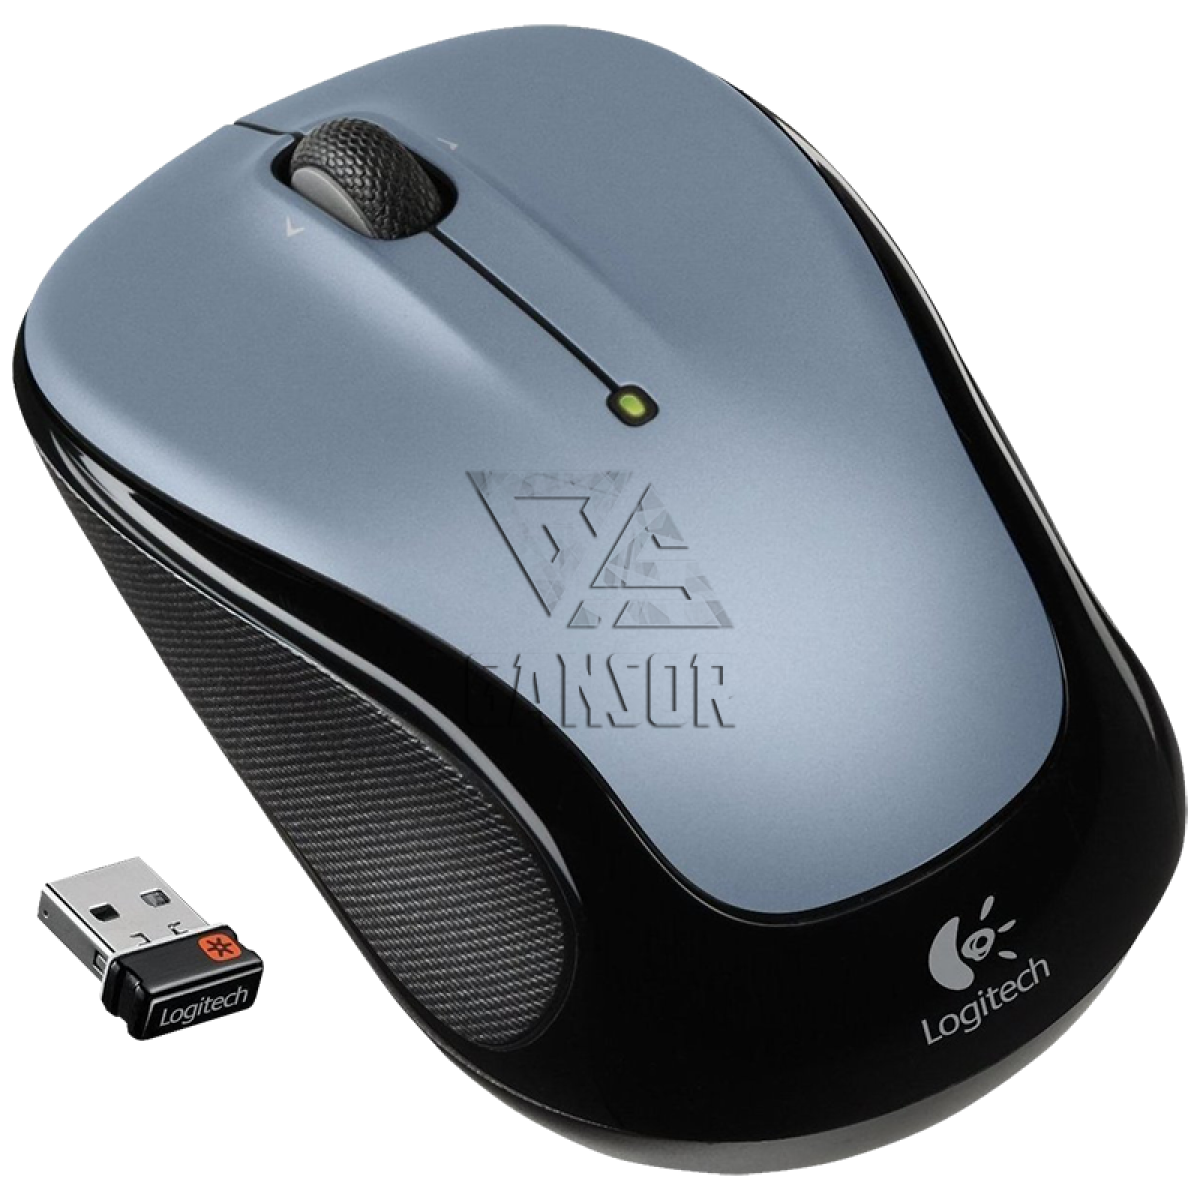 Logitech Wireless Mouse m325. Logitech беспроводная мышь ь325. Logitech m325 Limited. Мышь беспроводная Logitech m325 Dark Silver.